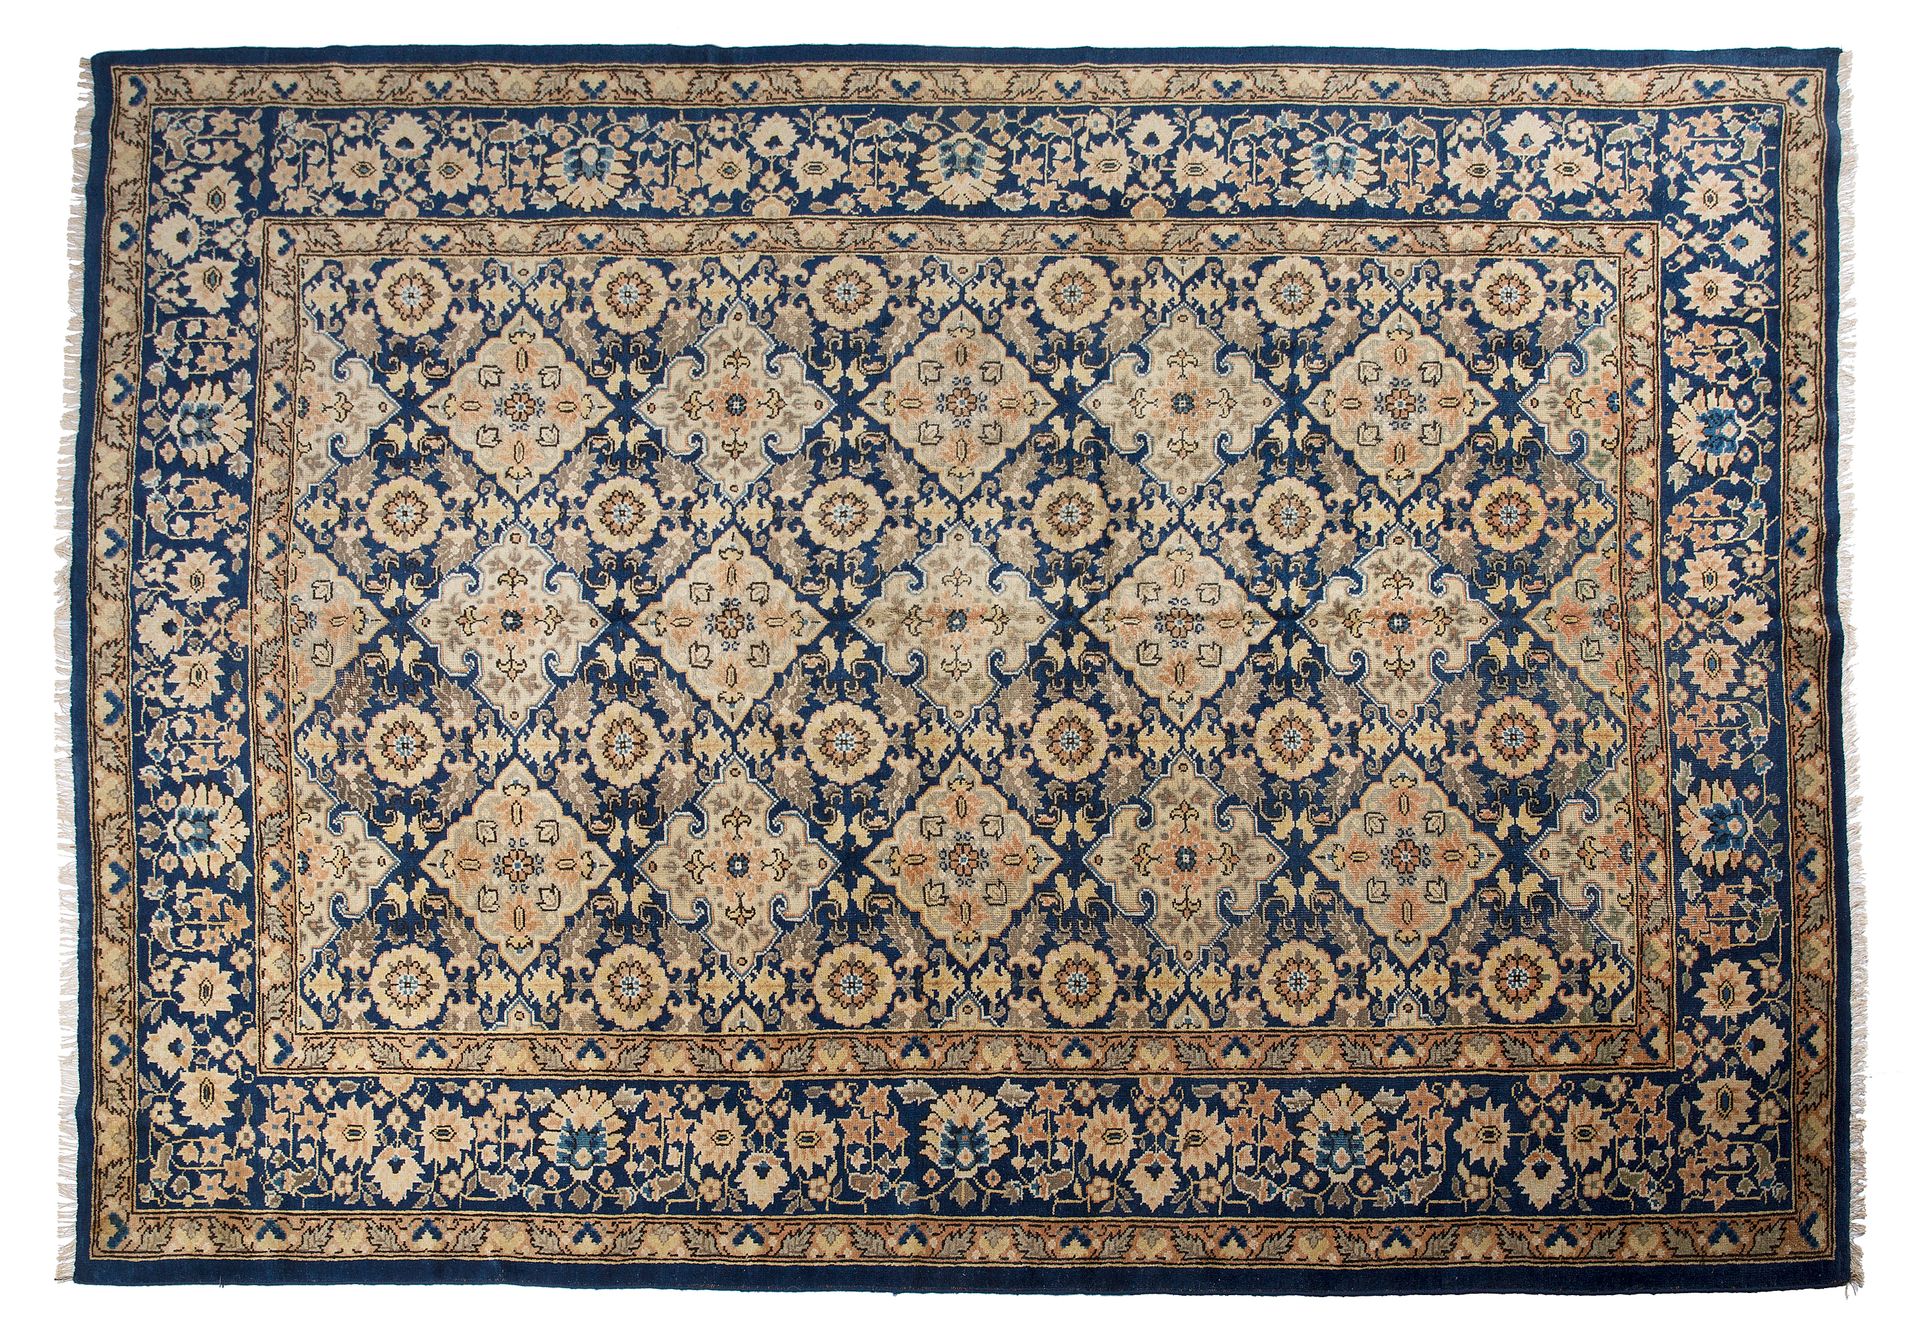 Null Tapis YARKAND (Asie Centrale), fin du XIXe siècle

Dimensions : 310 x 225cm&hellip;